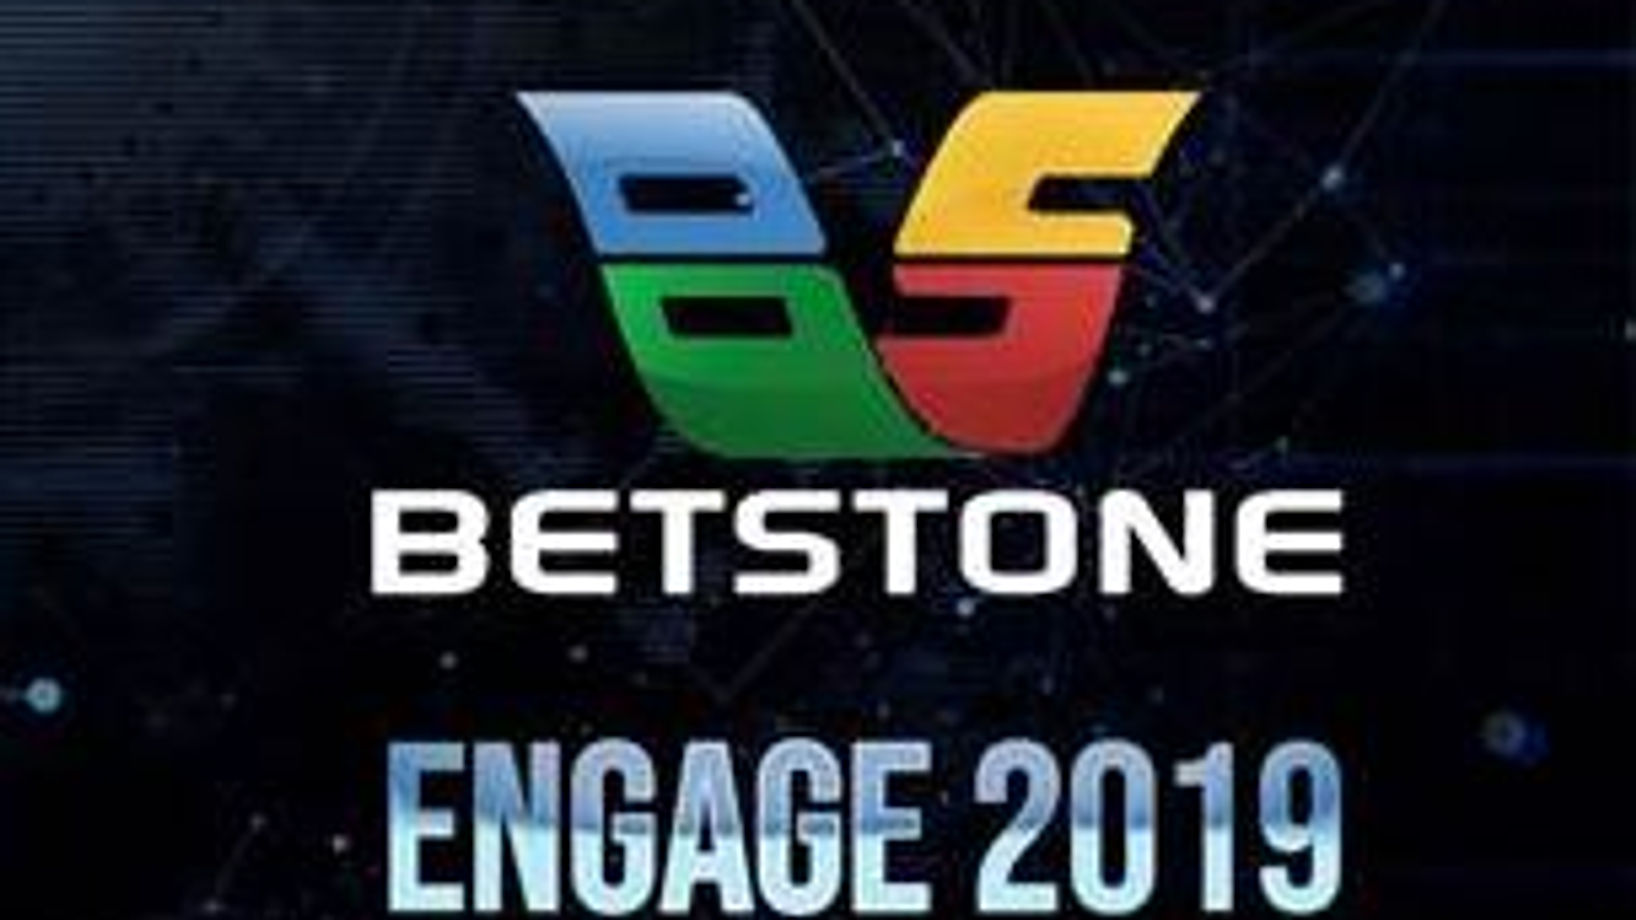 Video Betstone Engage 2019